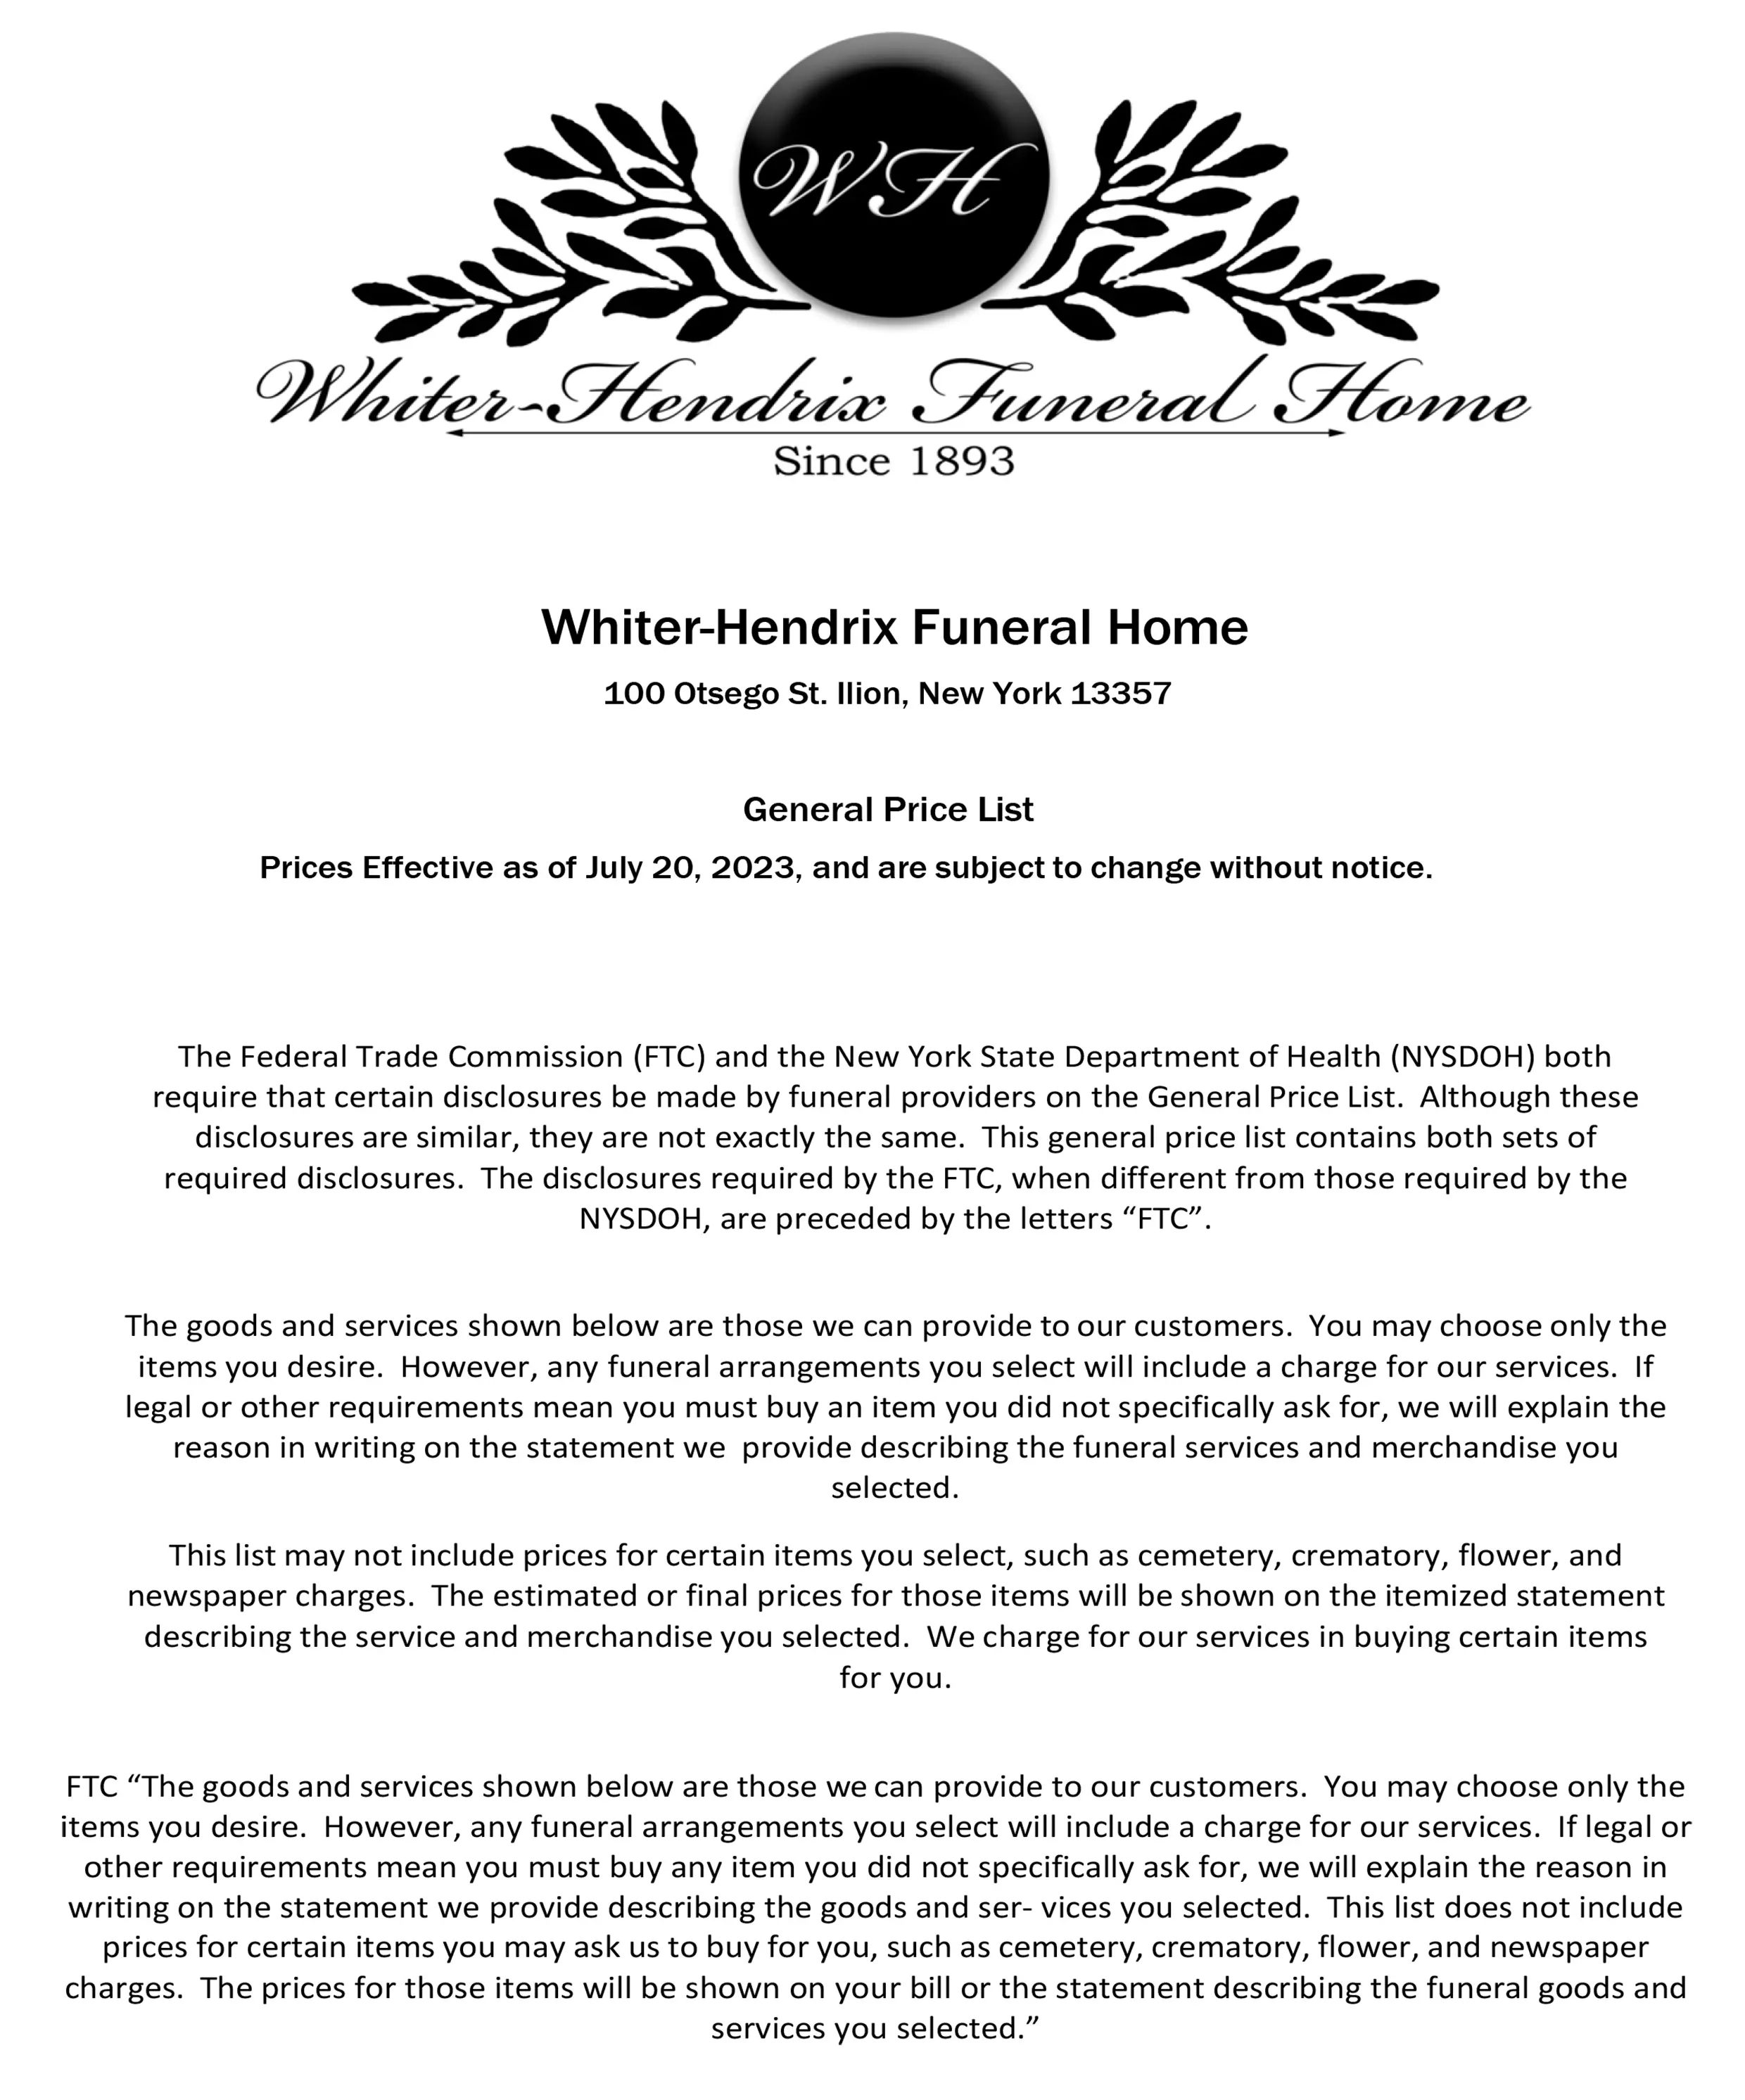 WhiterHendrix Funeral Home Illion, NY